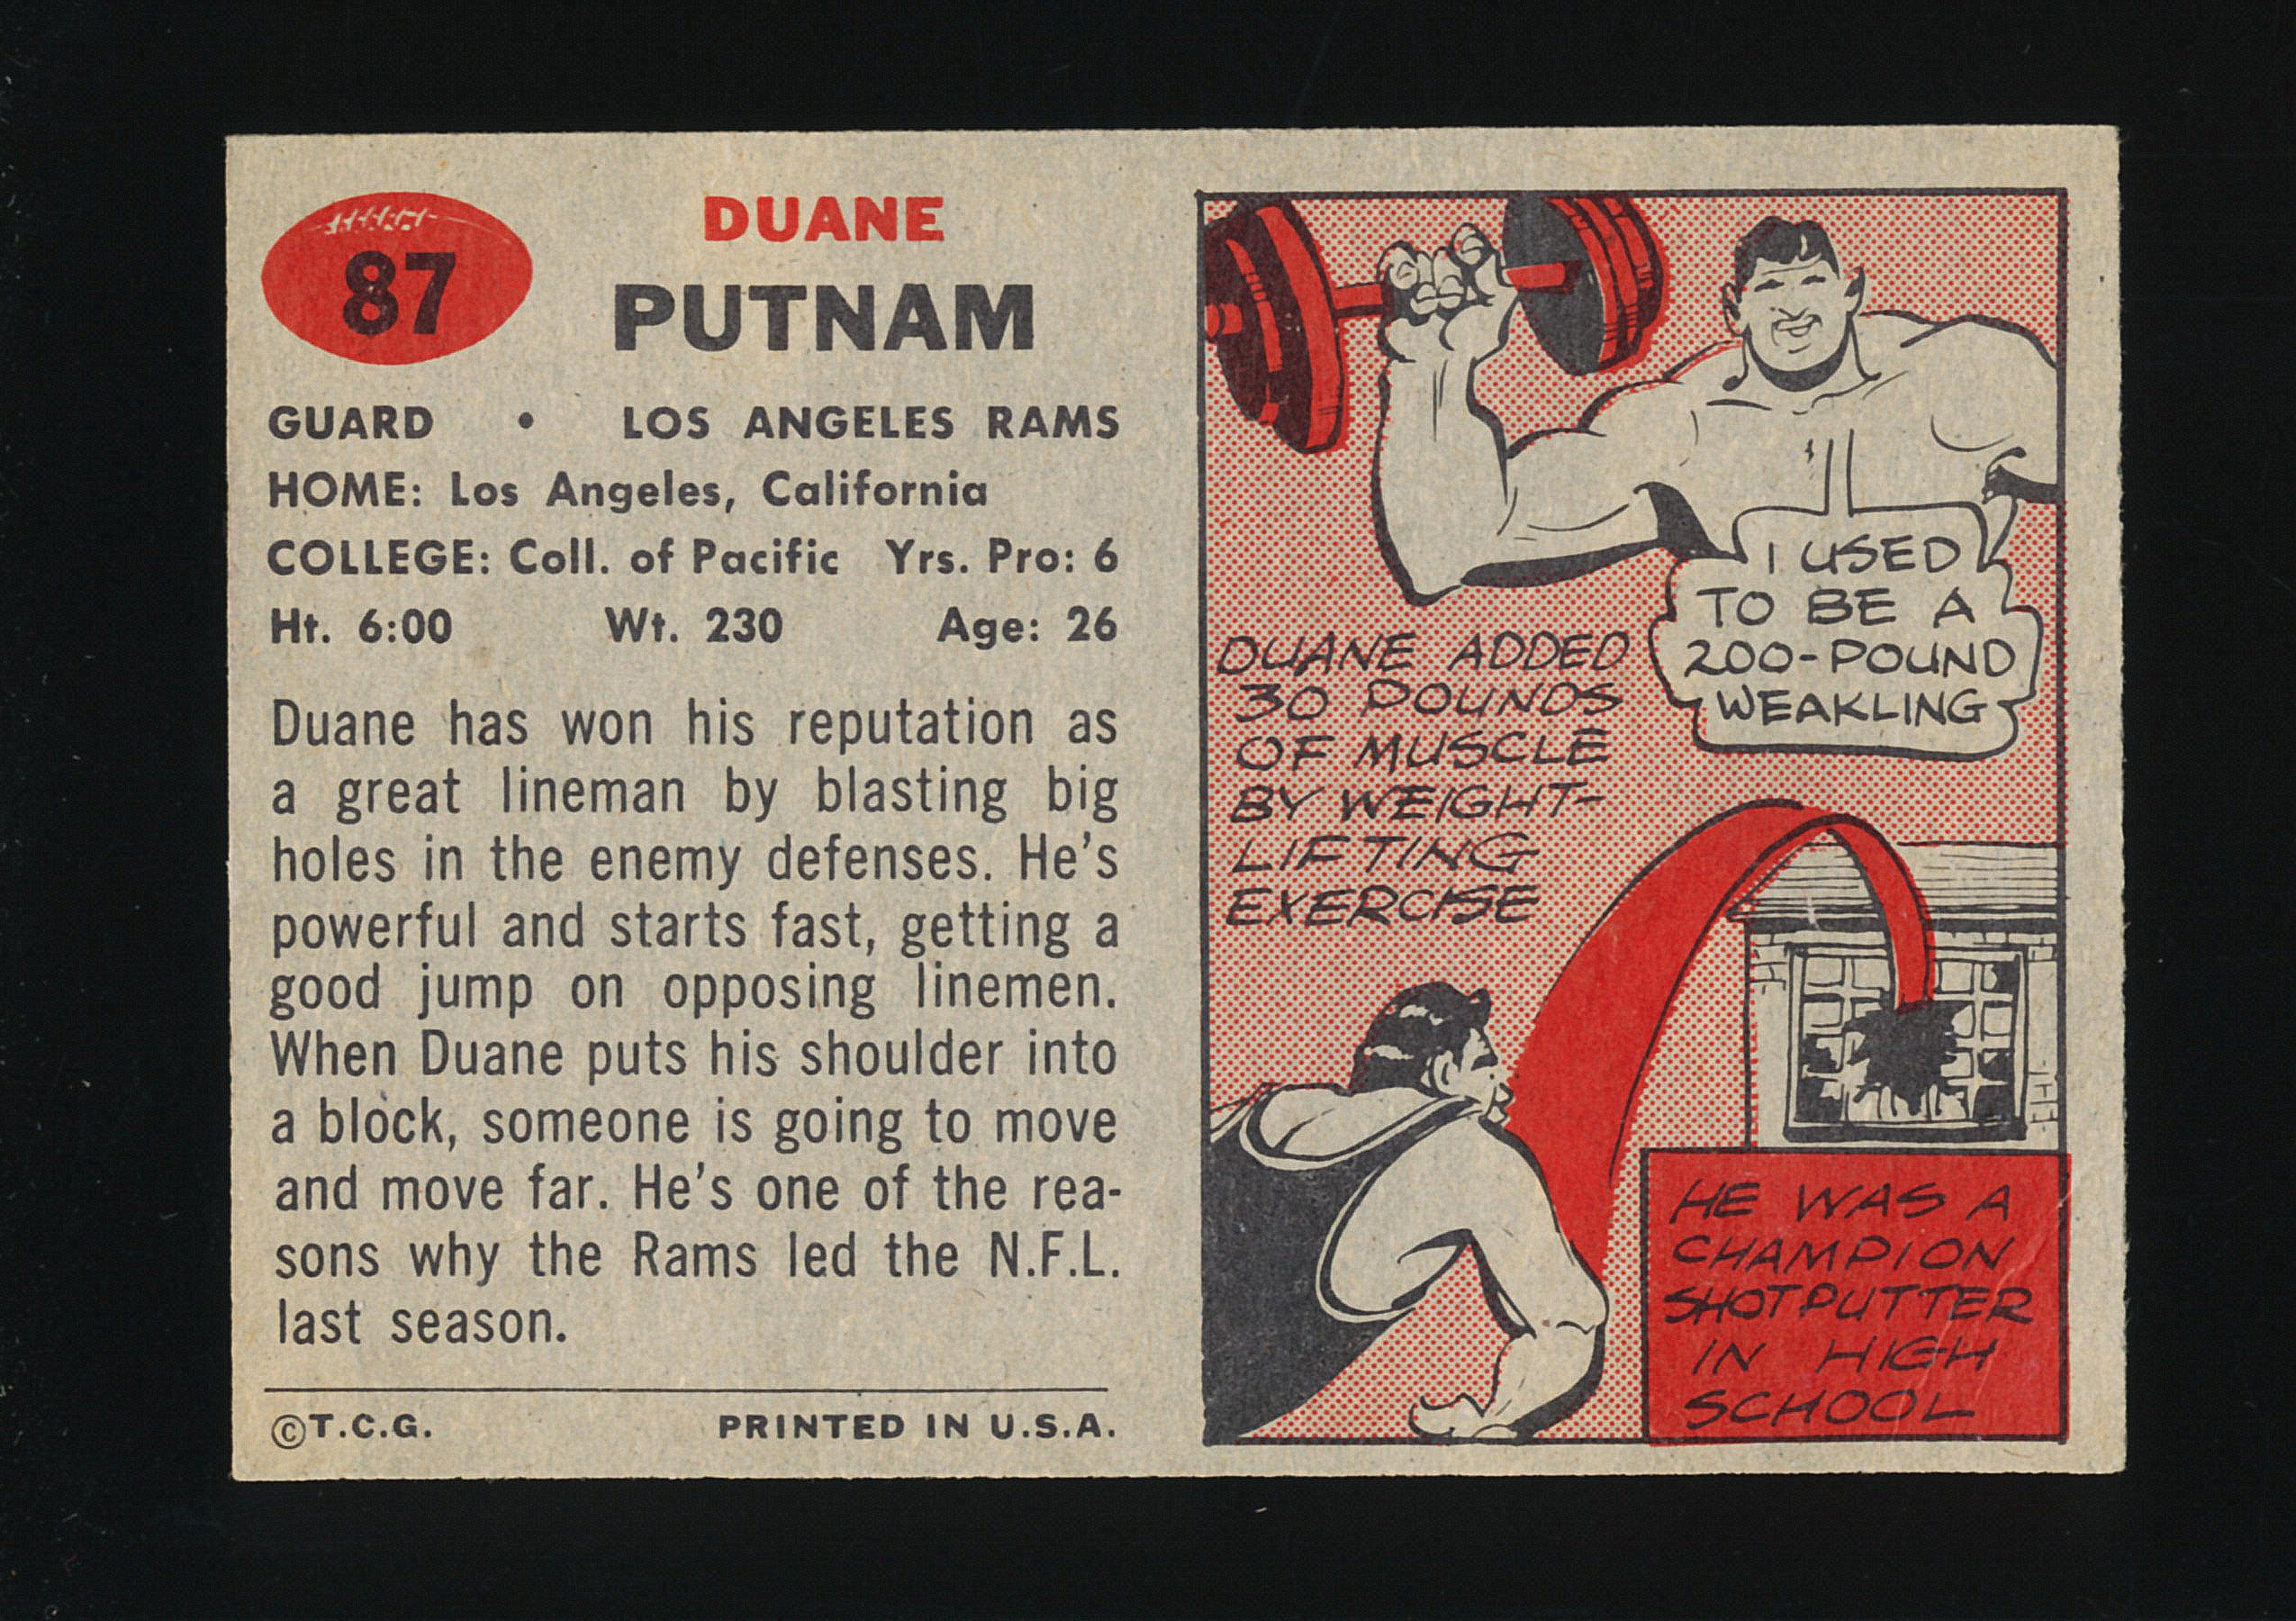 1957 Topps Football Card #87 Duane Putnam Los Angeles Rams